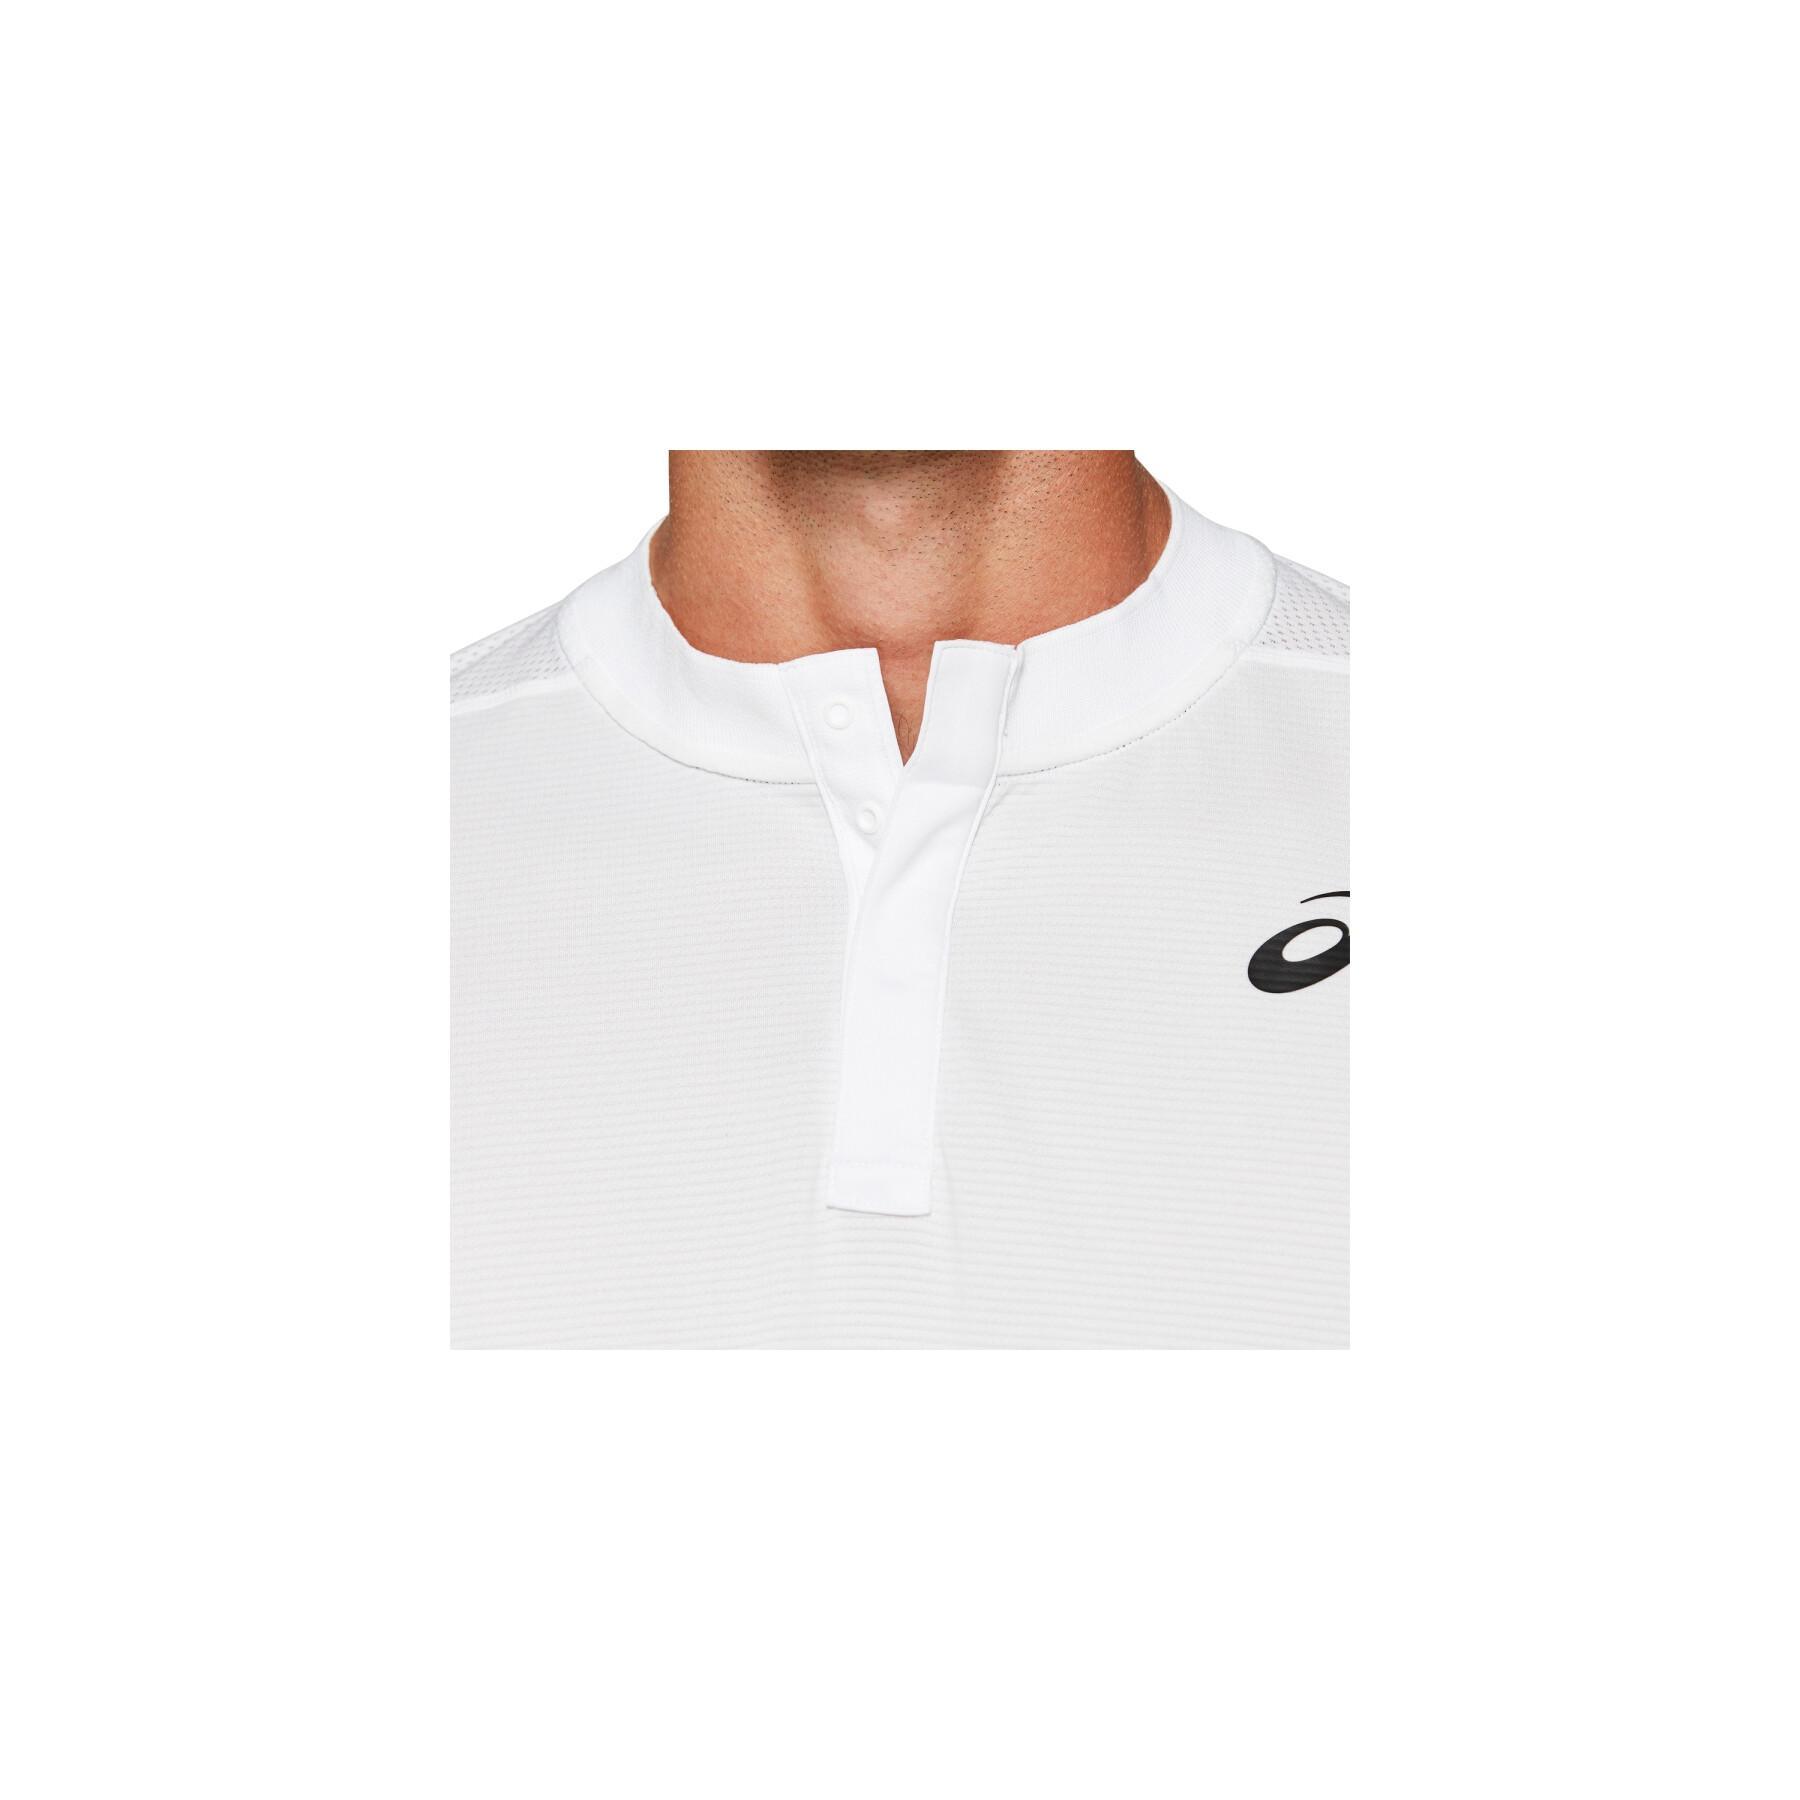 Camiseta Asics Gel Cool Polo Shirt